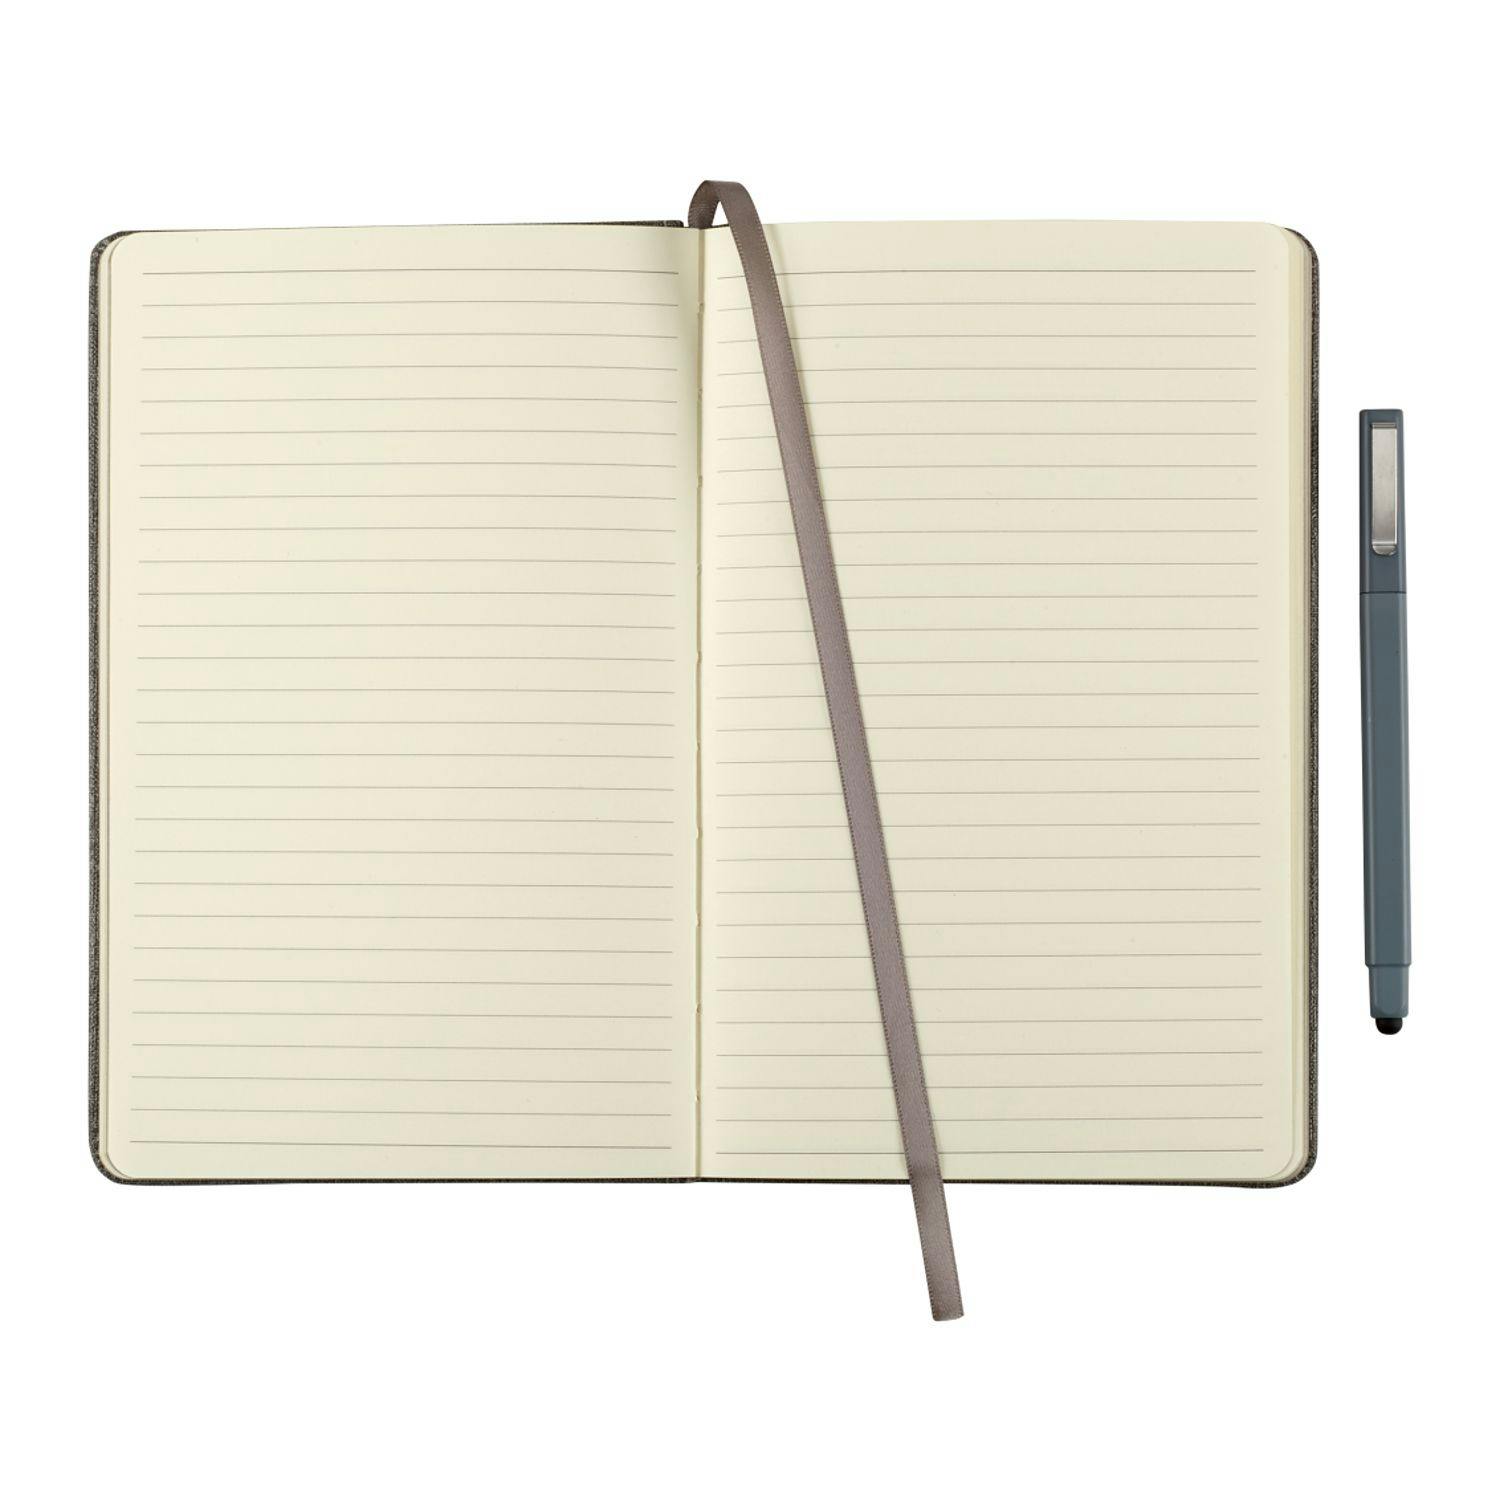 5.5" x 8.5" Heathered Hard Bound JournalBook® - additional Image 1